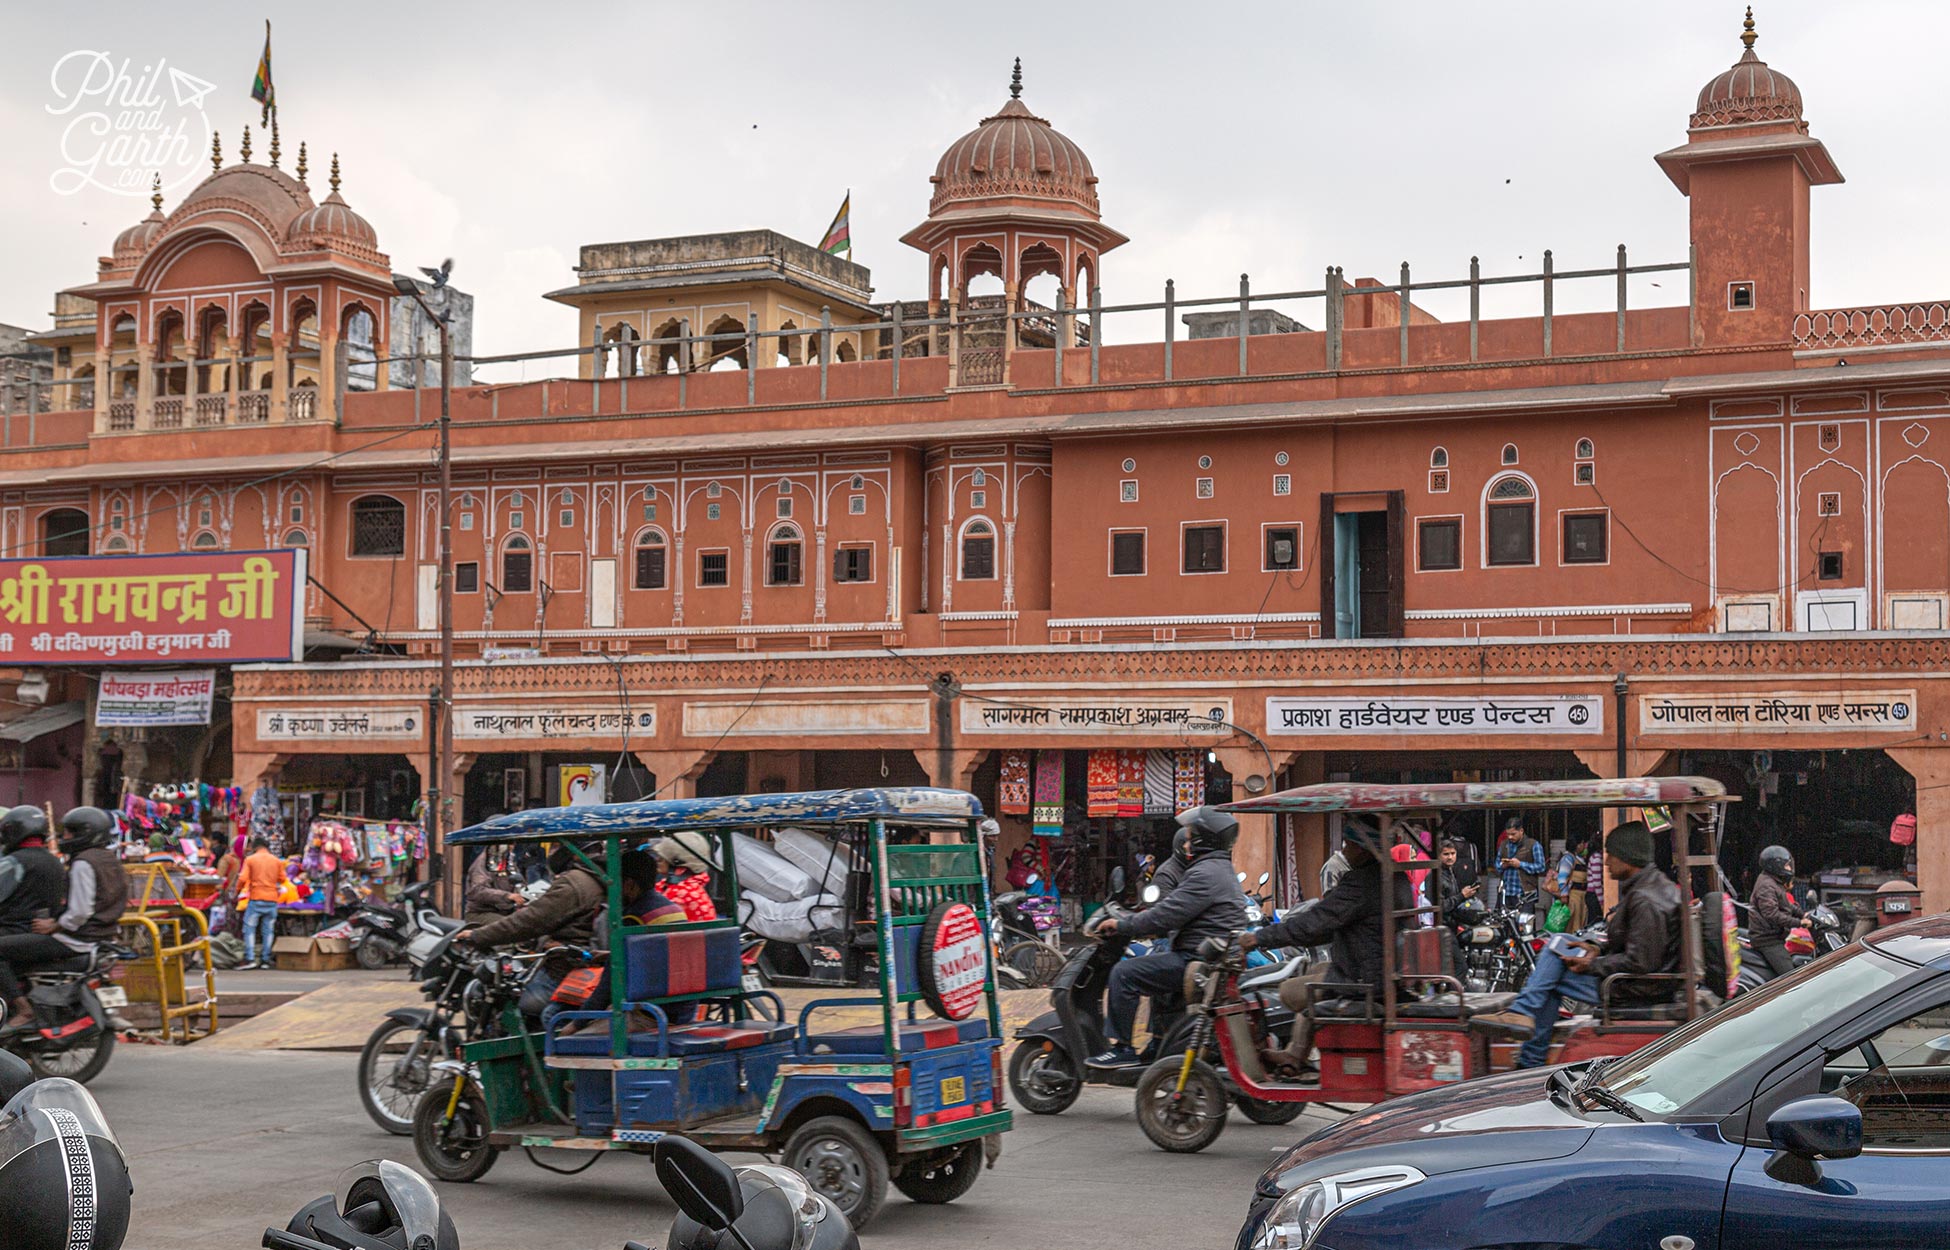 The Chandpole Bazaar shops line each side of the road